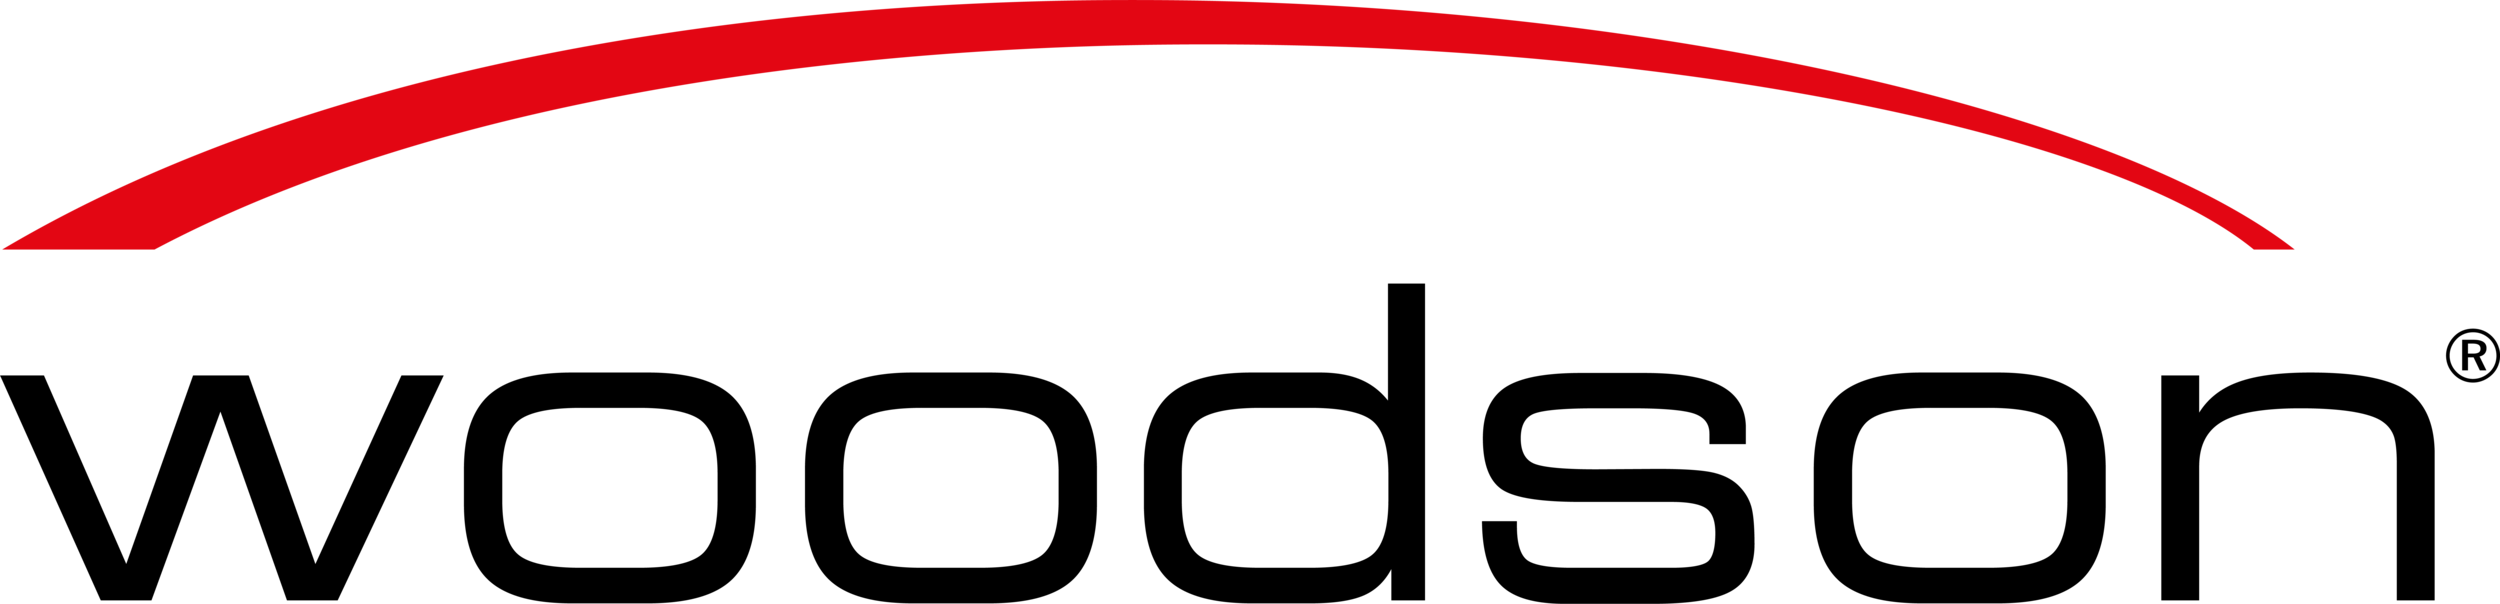 Woodson Logo.png